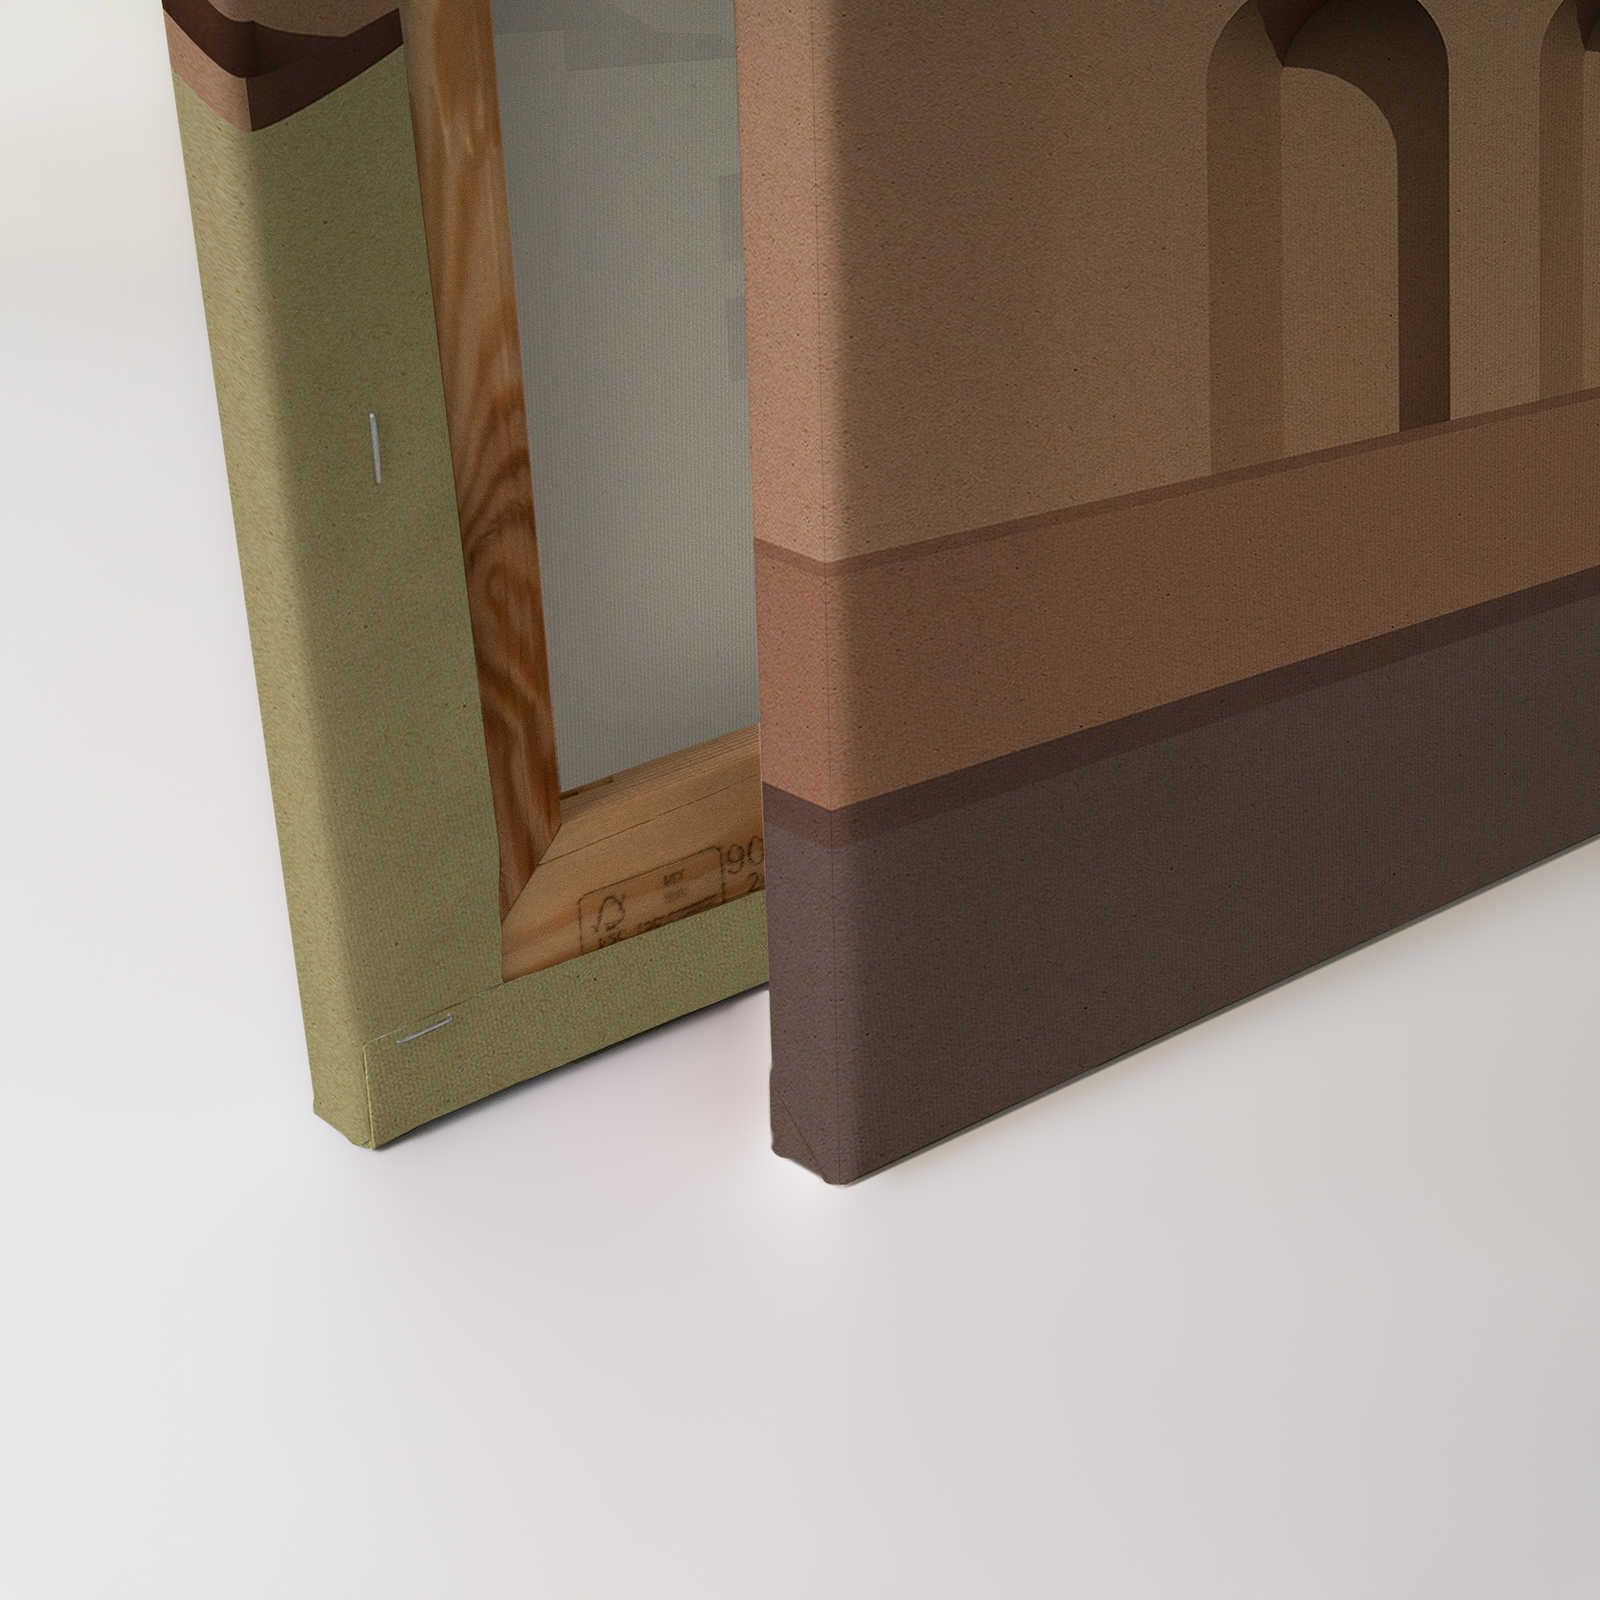             Tanger 2 - Leinwandbild Architektur Dessert Design abstrakt – 1,20 m x 0,80 m
        